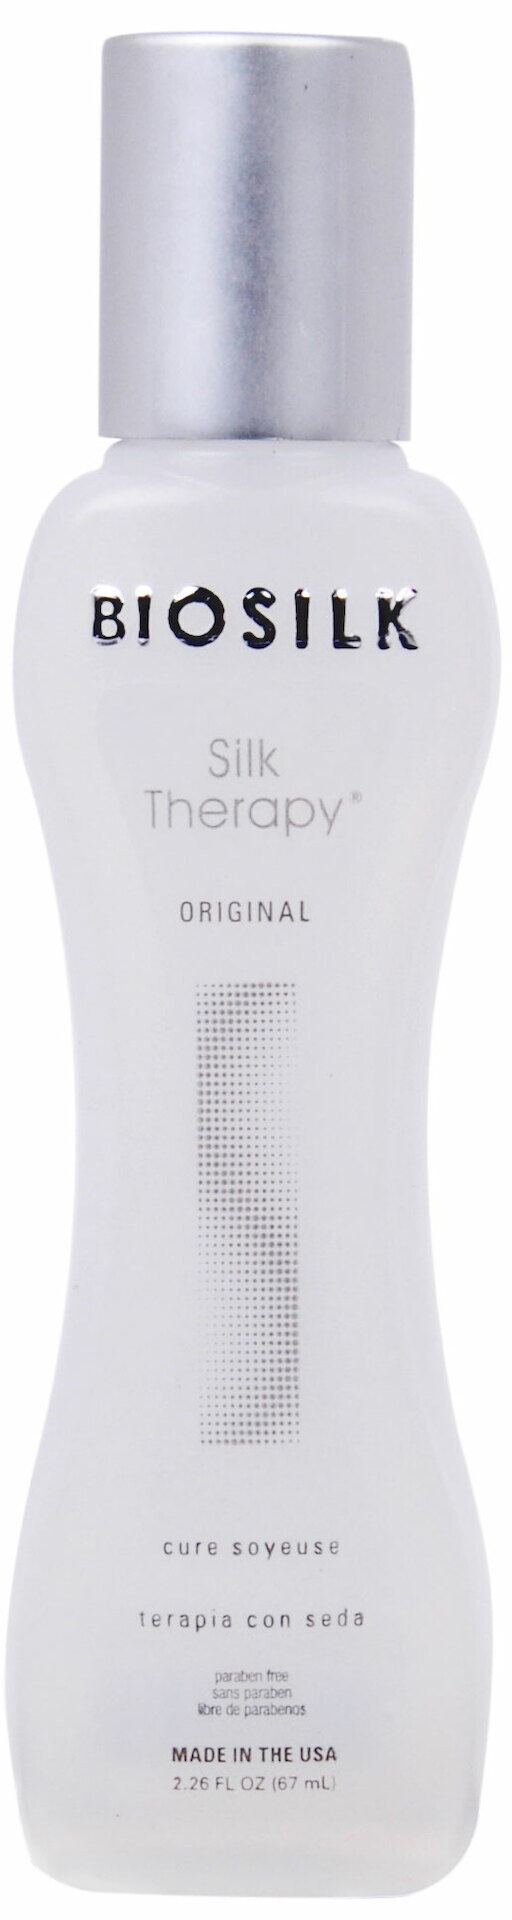 Biosilk Silk Therapy 67 Ml